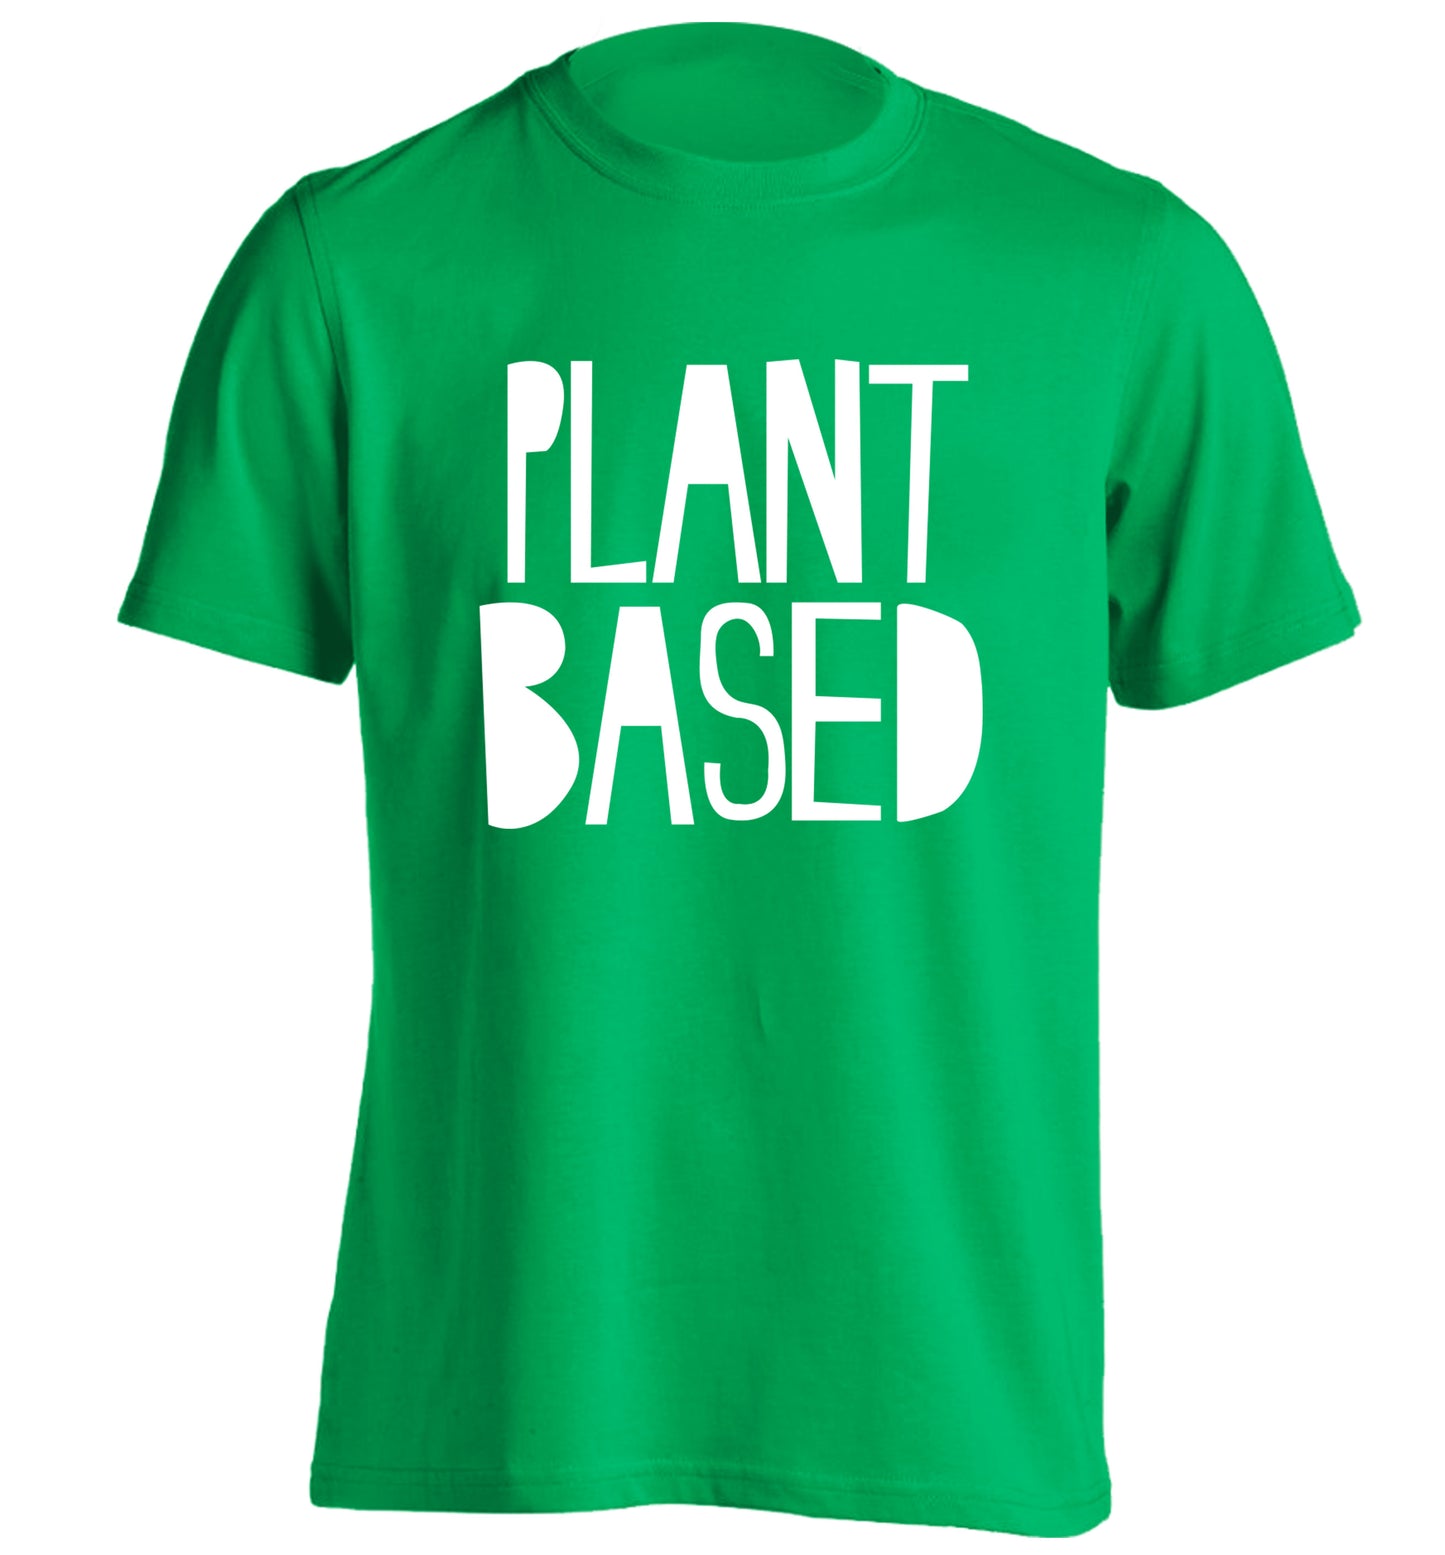 Plant Based adults unisex green Tshirt 2XL